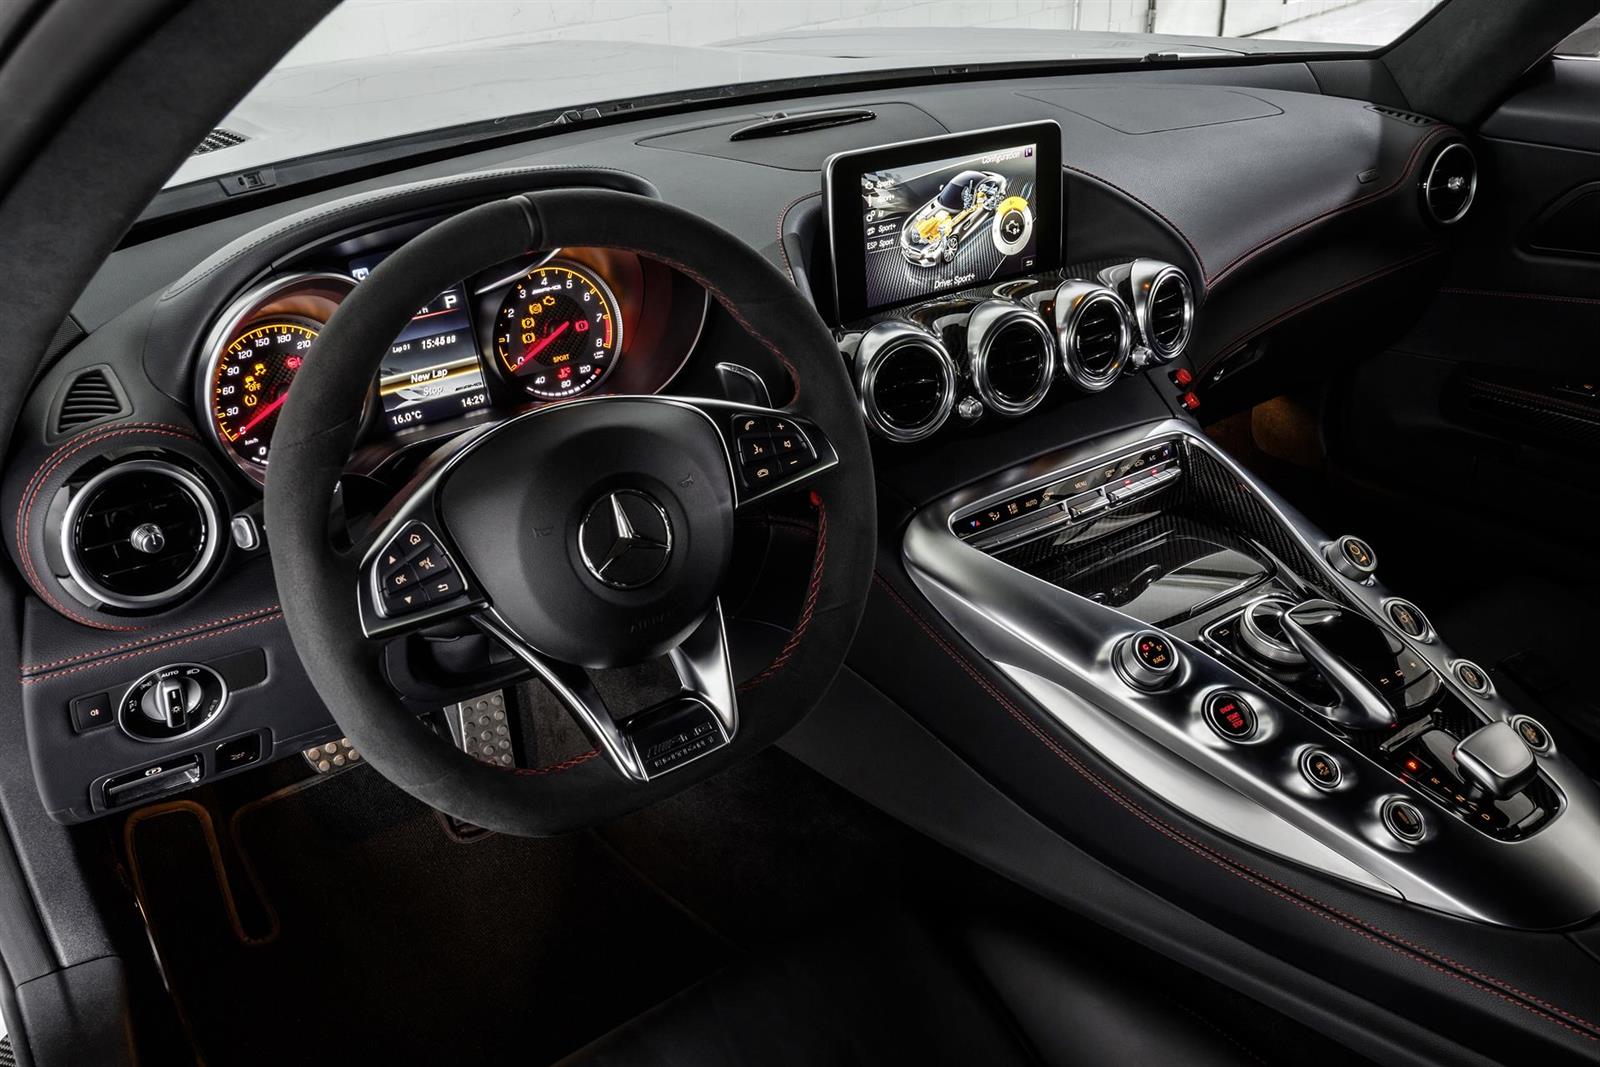 2015 Mercedes-Benz AMG GT S Safety Car